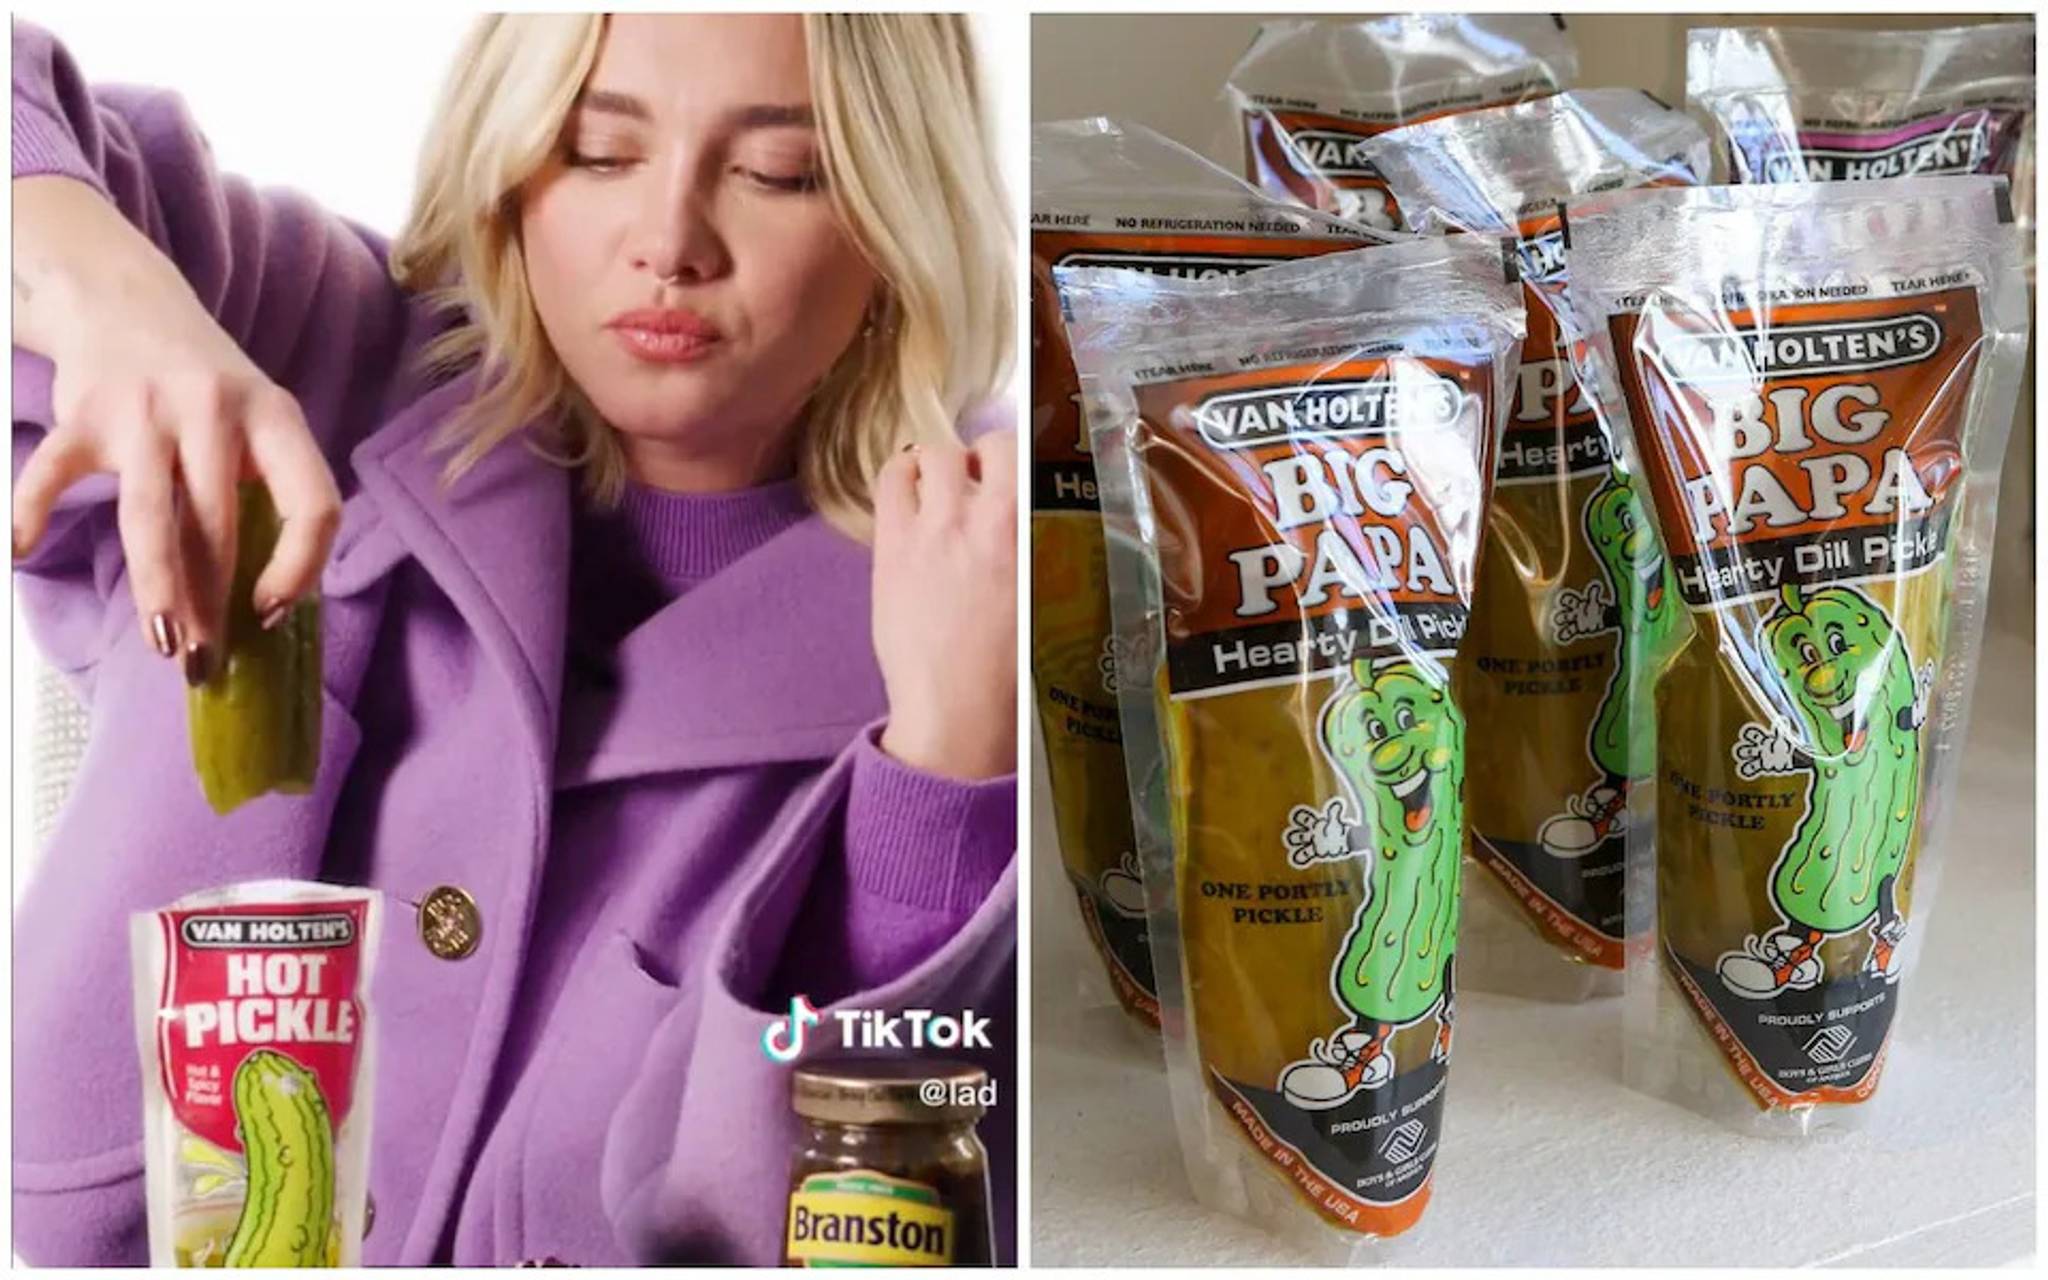 The #picklechallenge shows TikTok's role in food trends